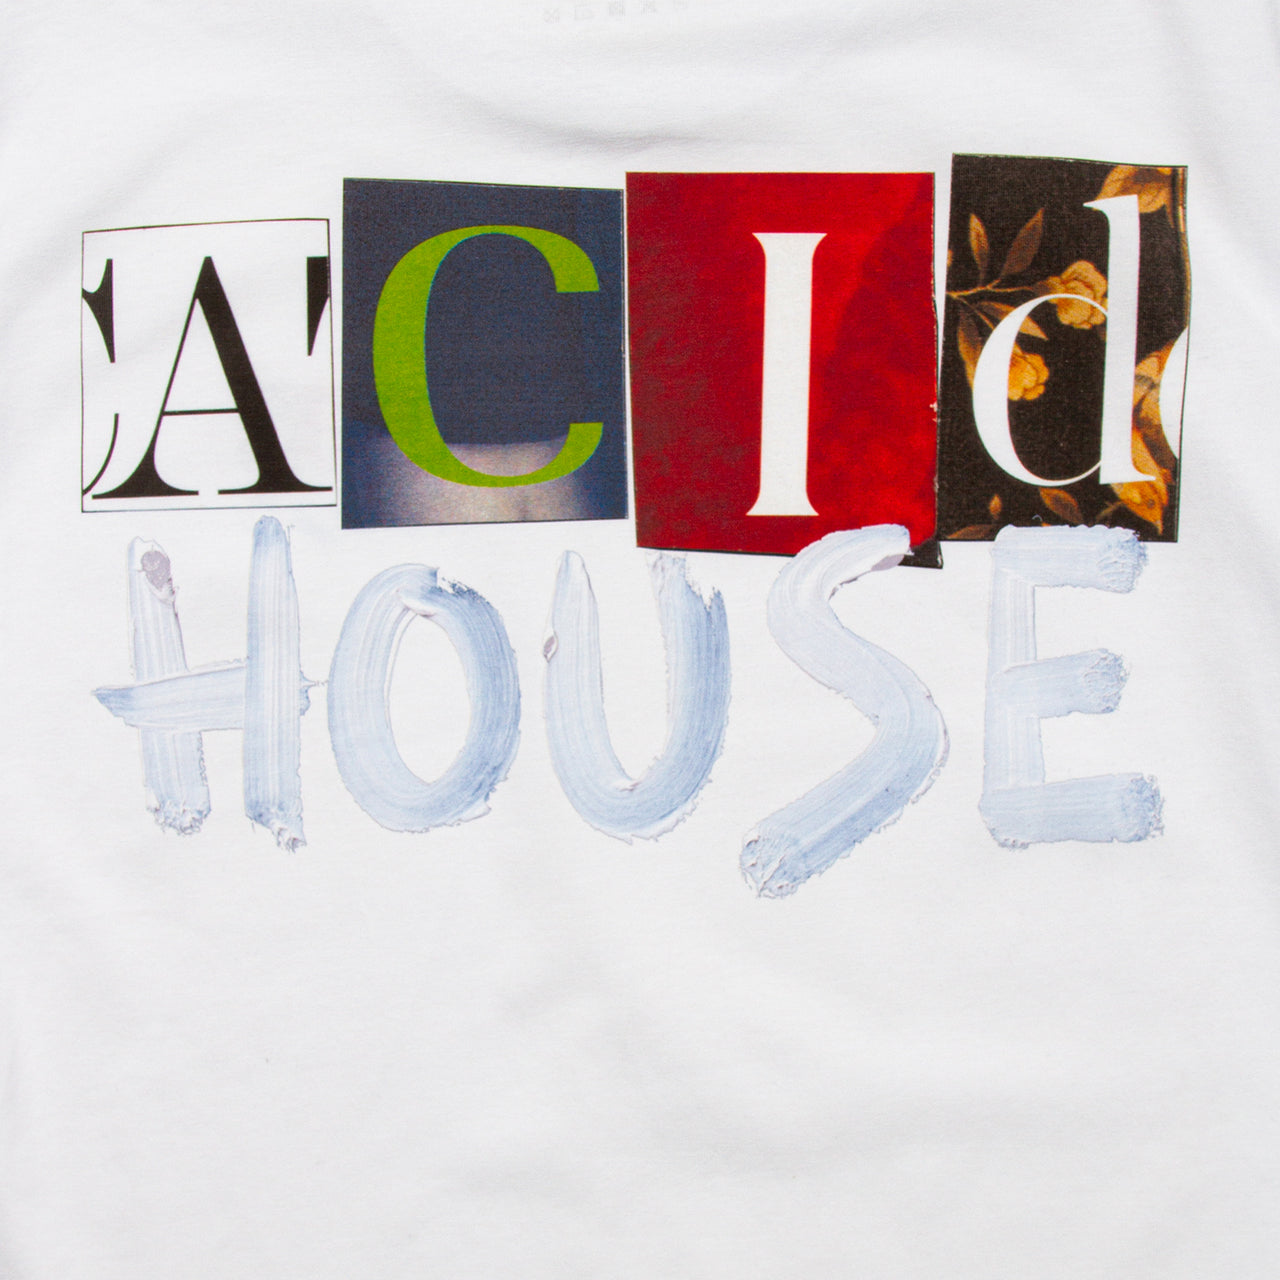 Acid House Cut Panorama Back Print - Tshirt - White